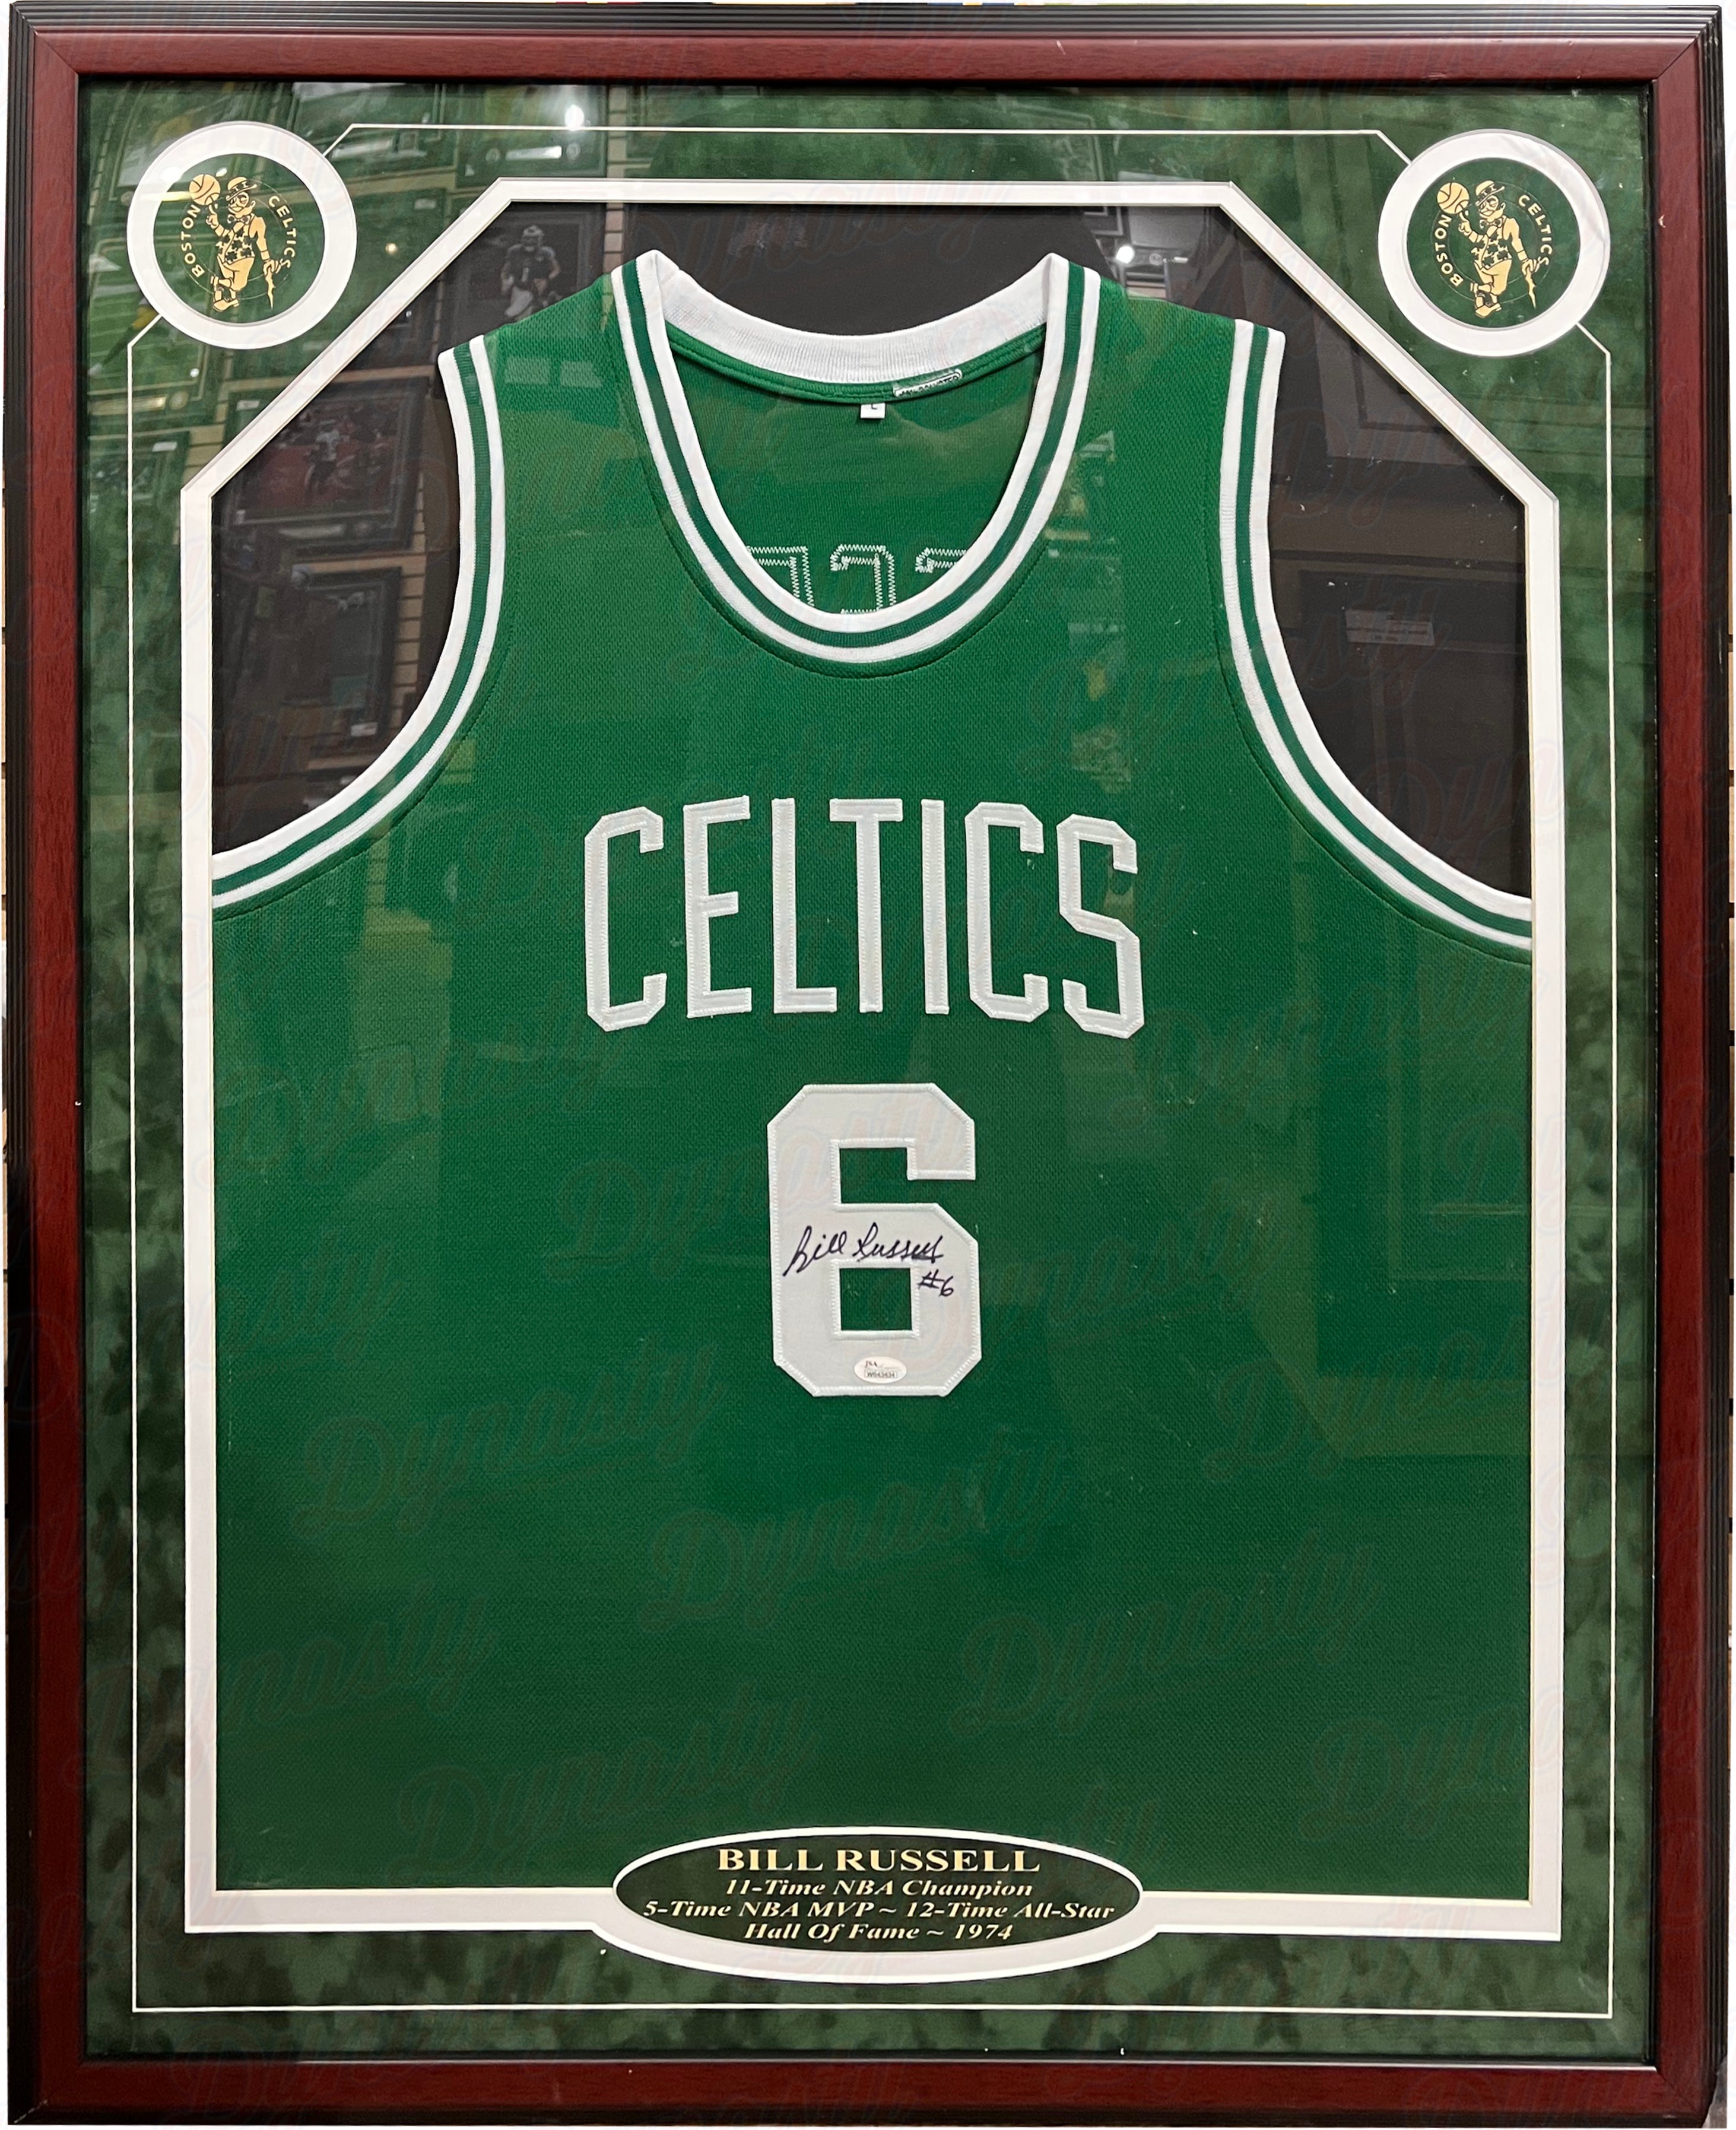 Boston Celtics Jerseys, Celtics Basketball Jerseys